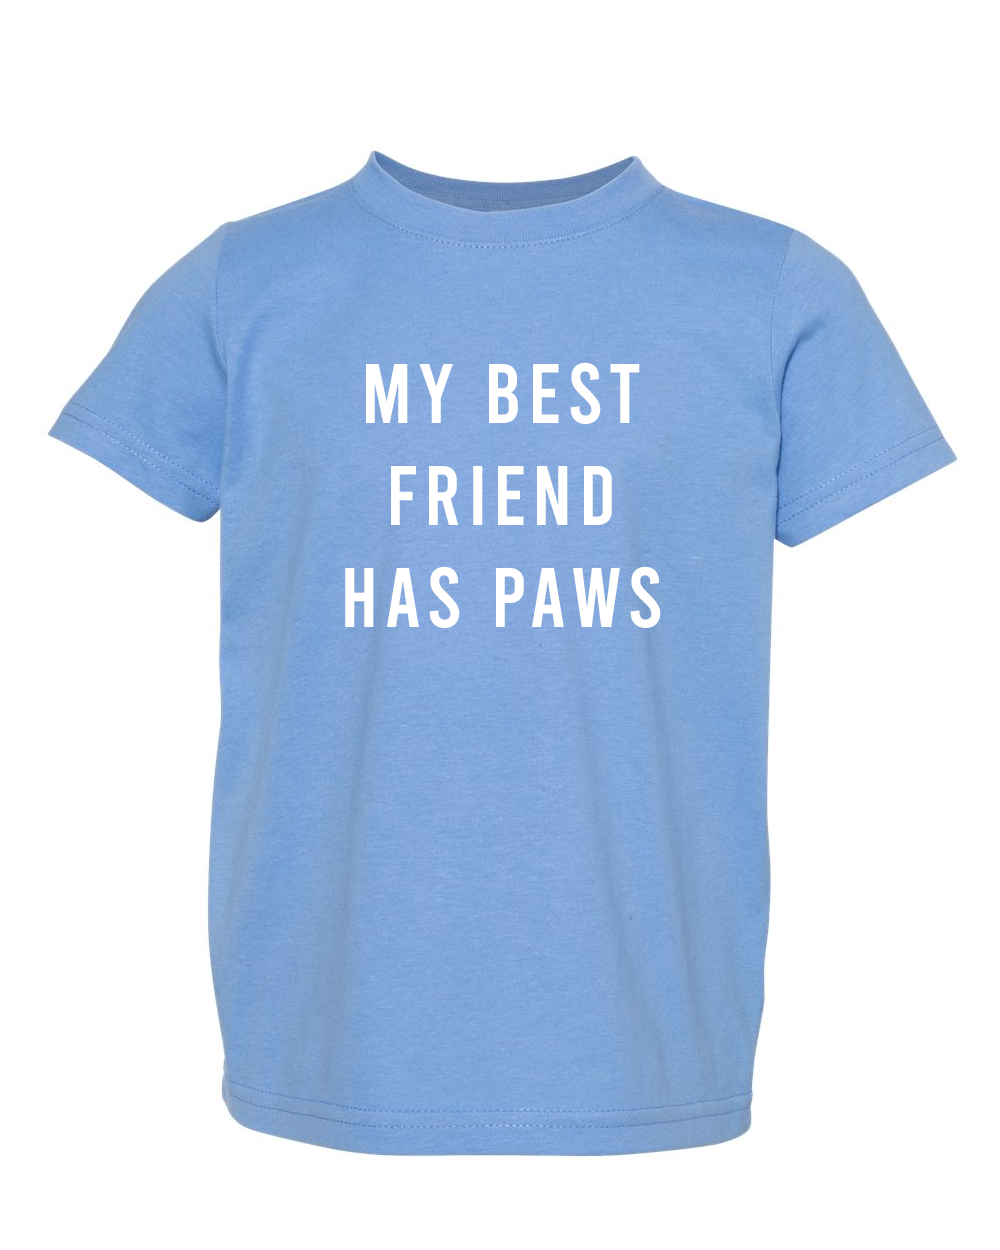 Best Friend Has Paws Shirt - Treat Dreams